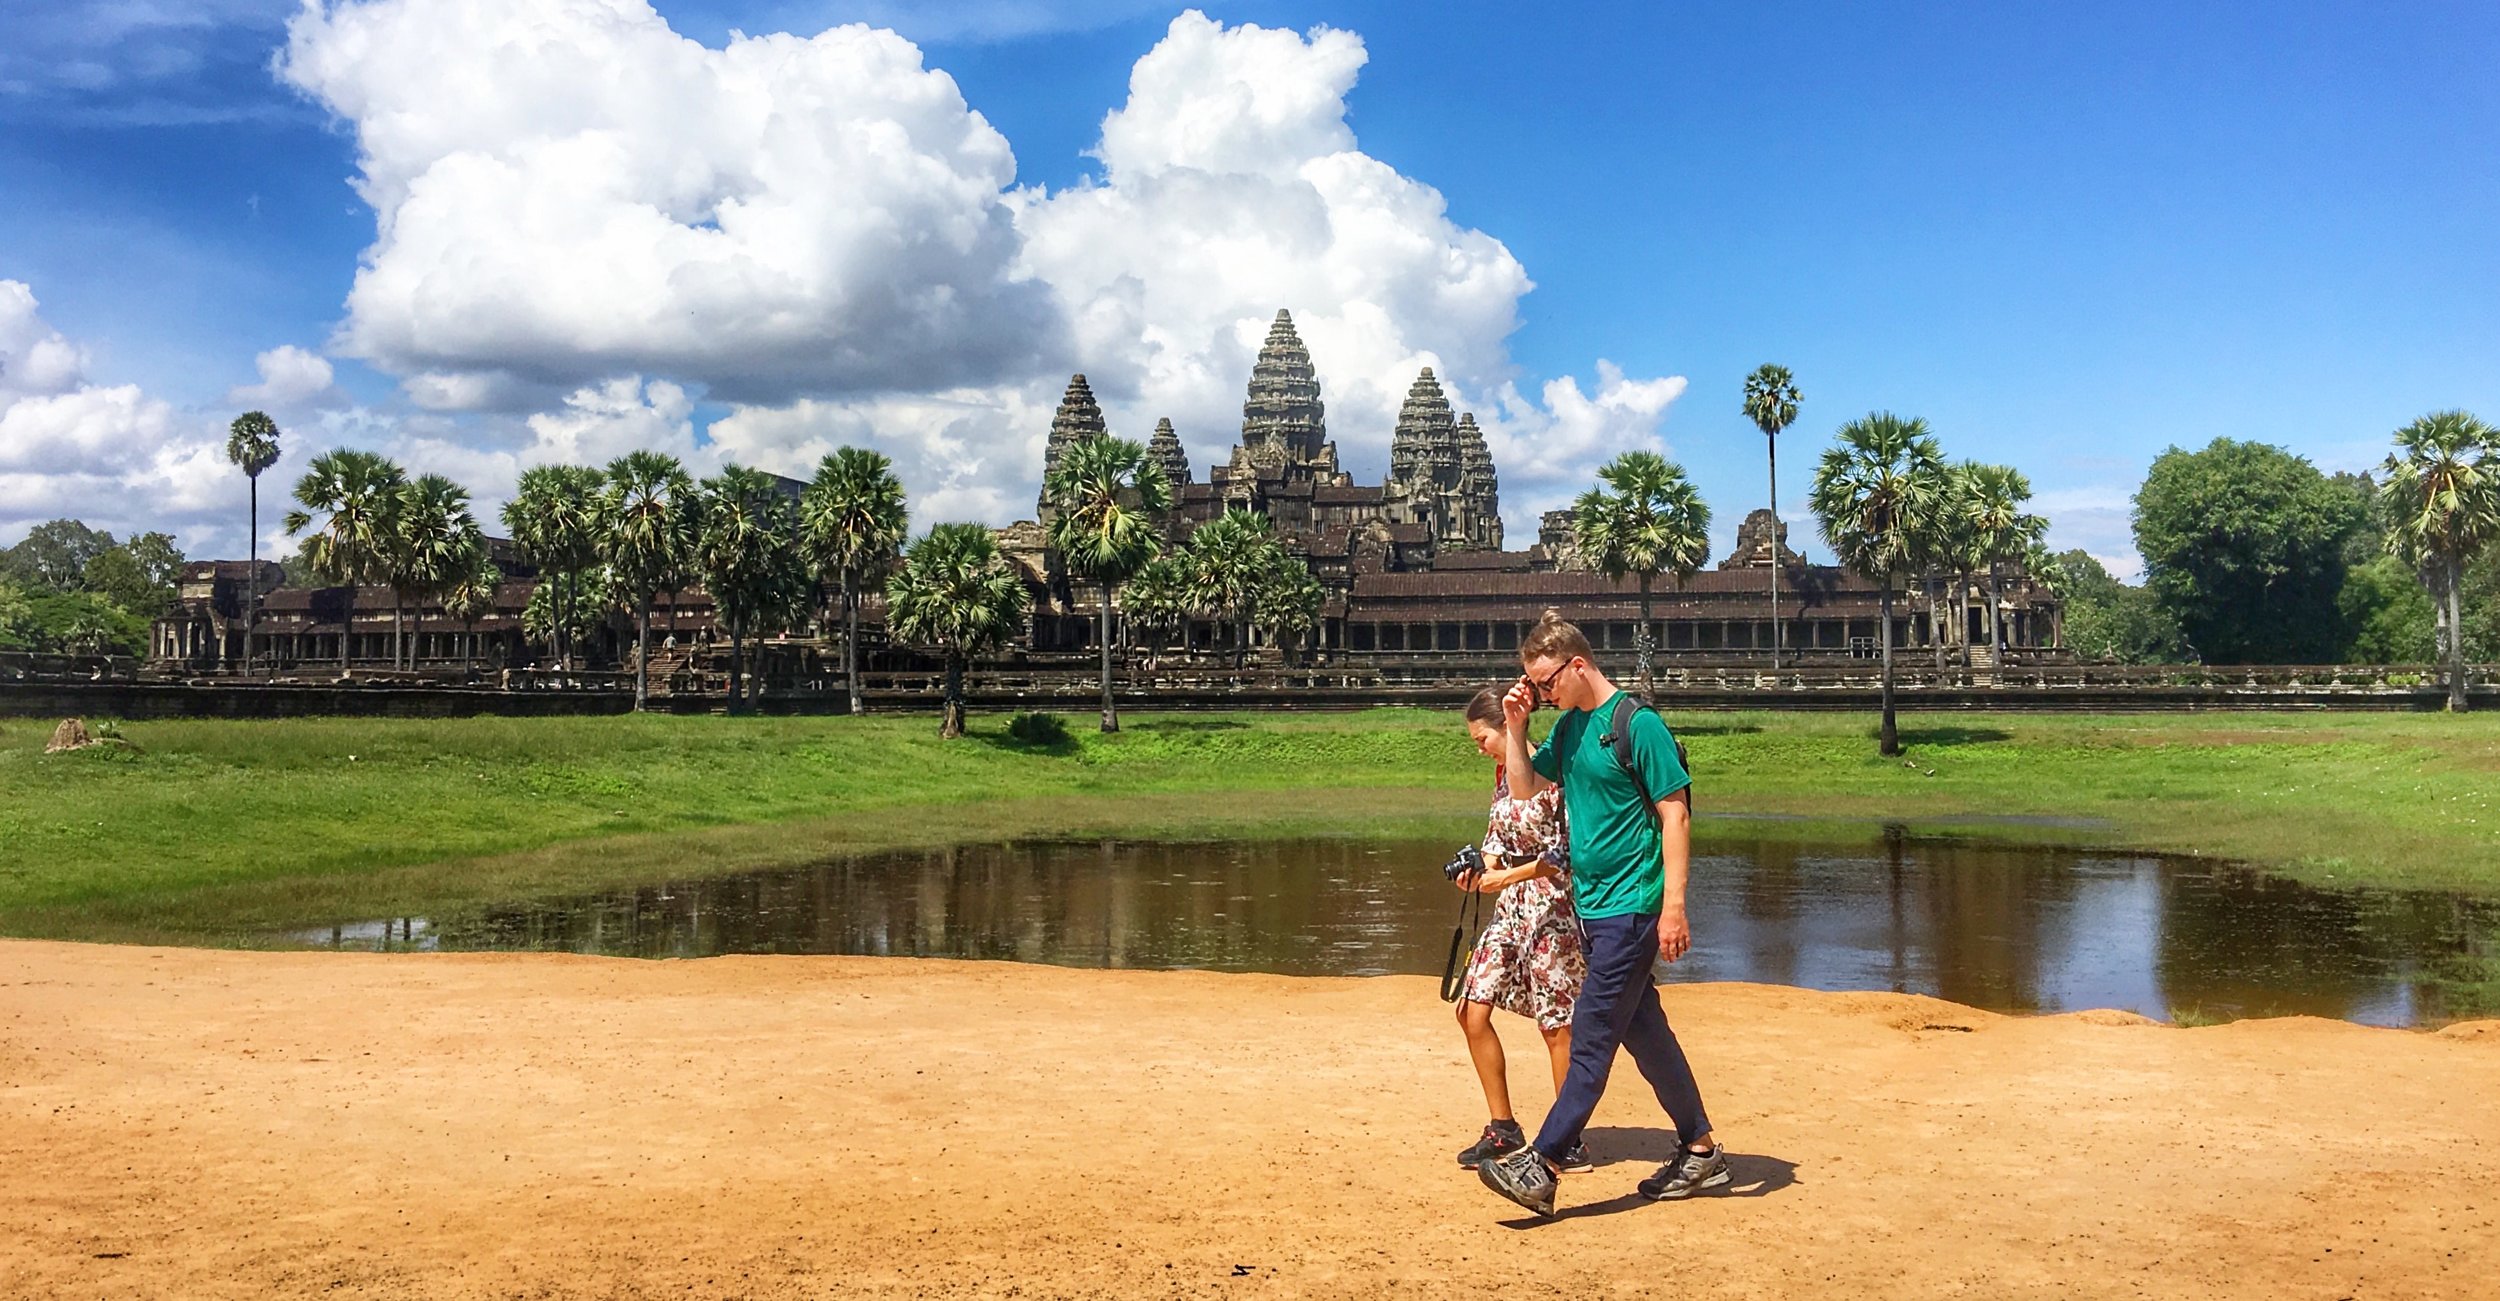   Avoiding crowds  at Angkor Wat   Learn more→  